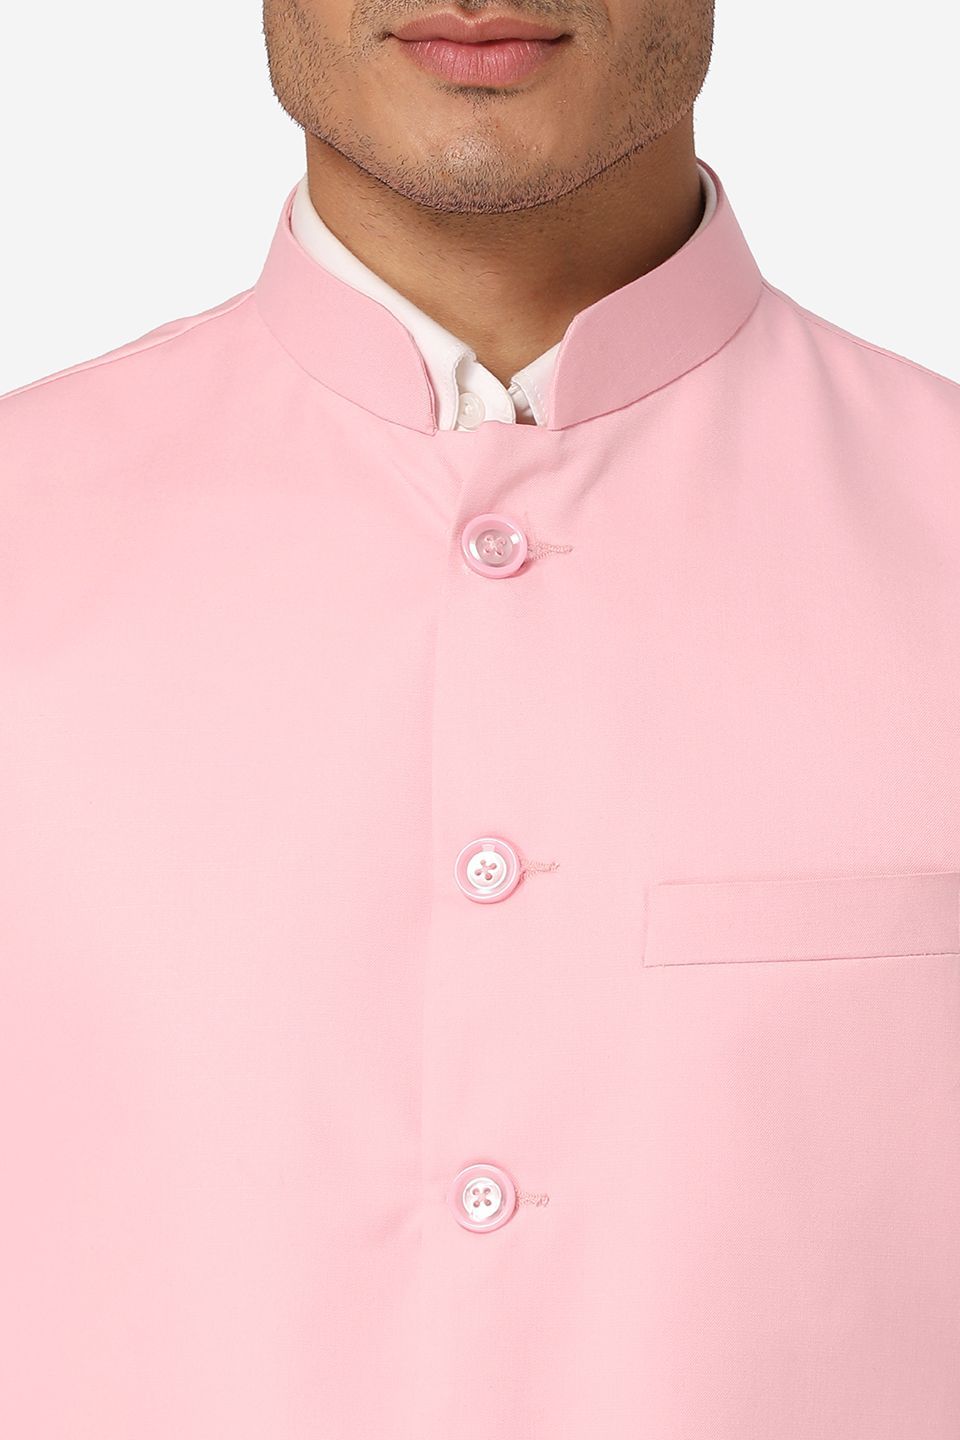 Wintage Men's Poly Cotton Festive and Casual Nehru Jacket Vest Waistcoat : Light Pink